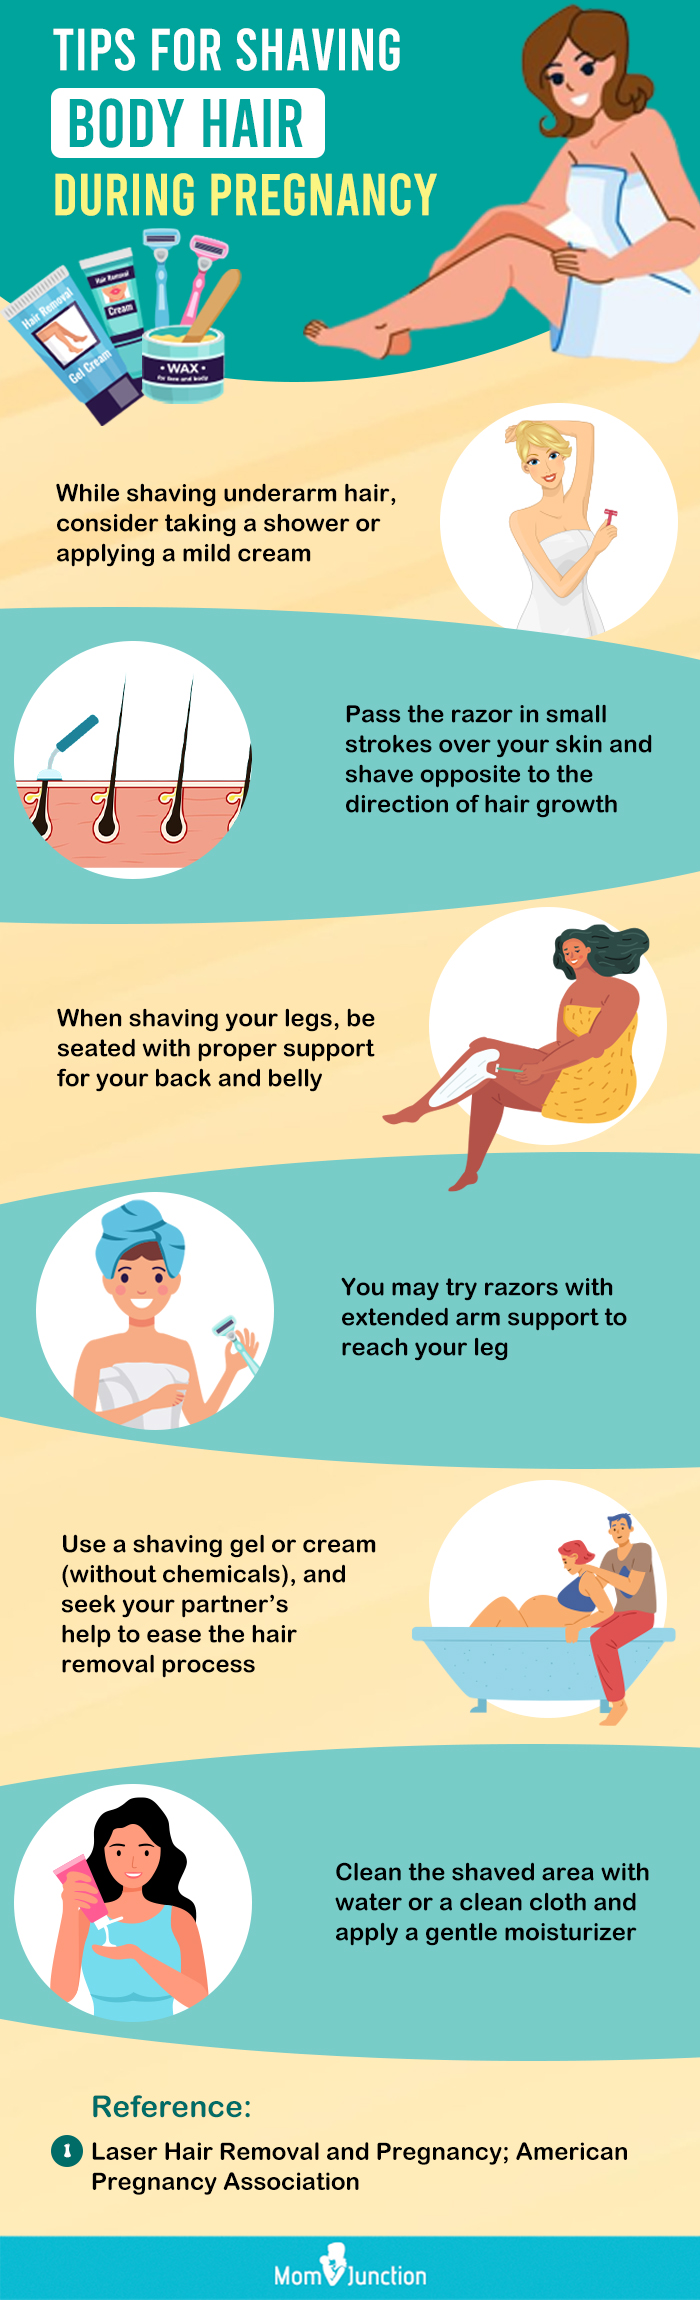 tips for shaving body hair during pregnancy (infographic)